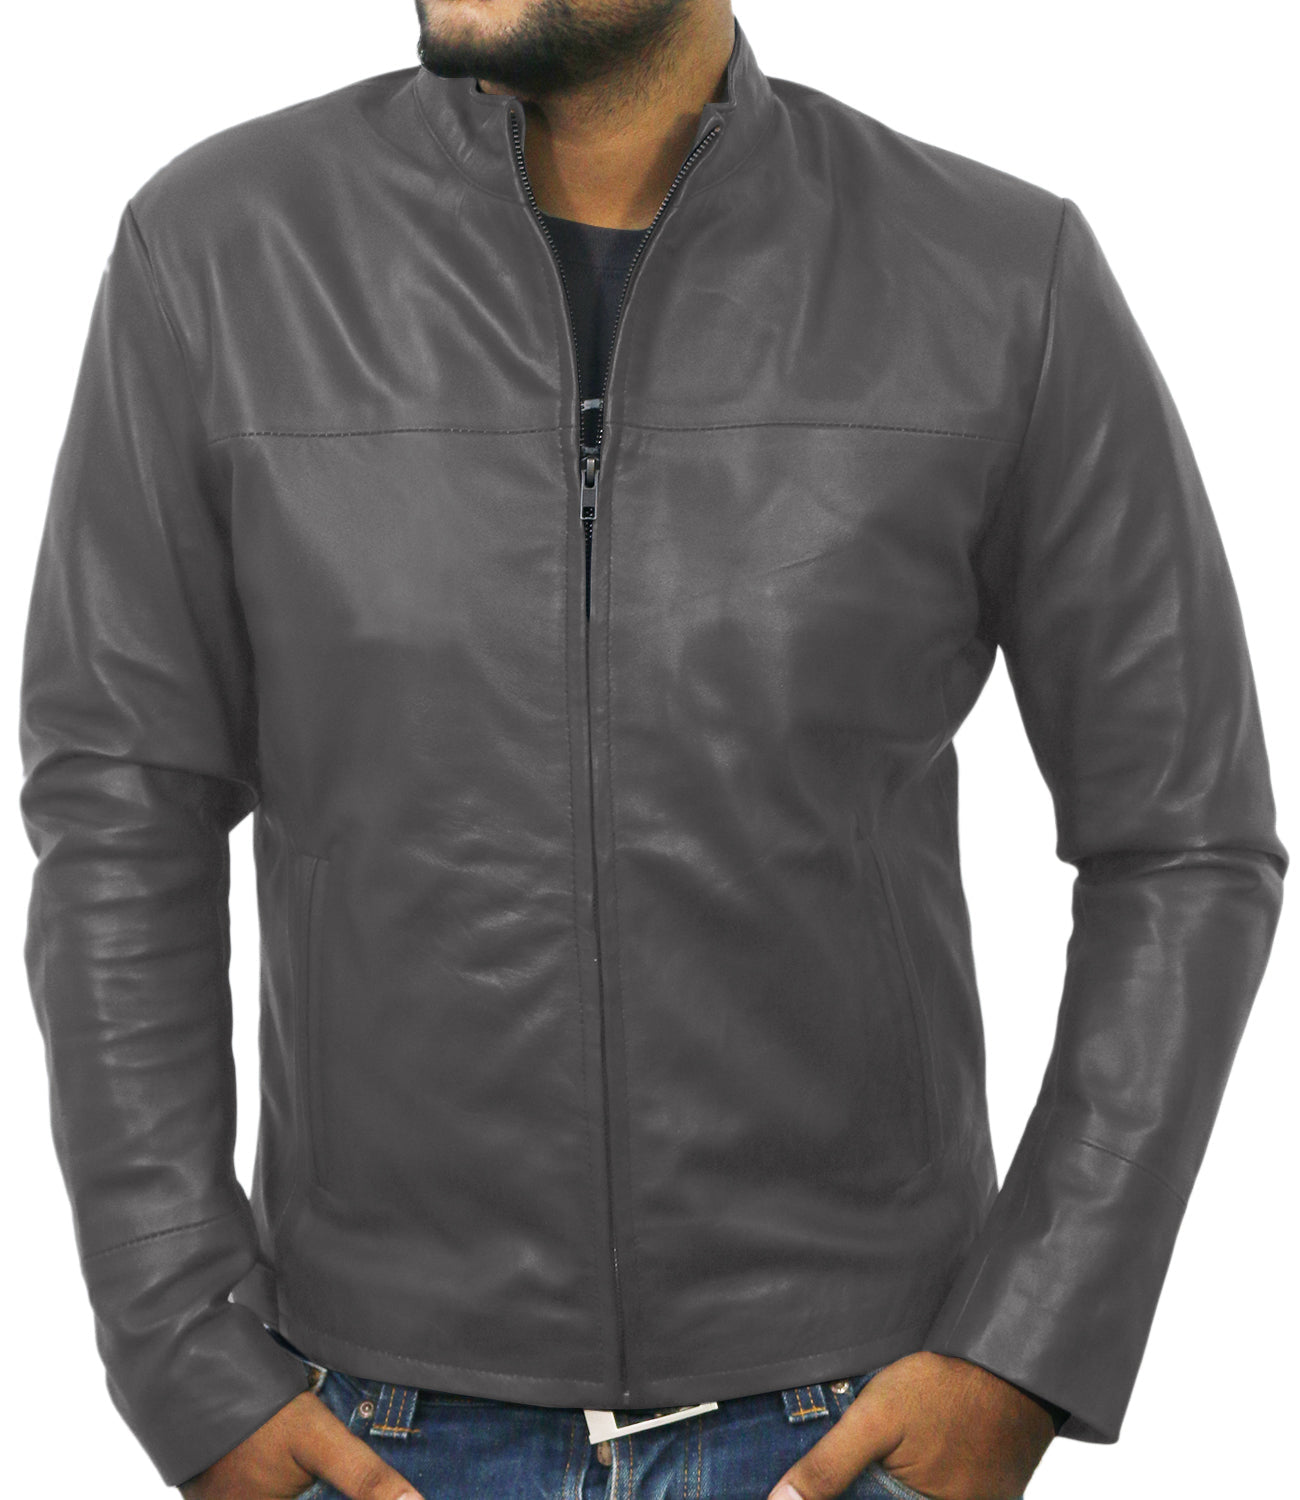 Leather Jackets Hub Mens Genuine Lambskin Leather Jacket (Black, Racer Jacket) - 1501212